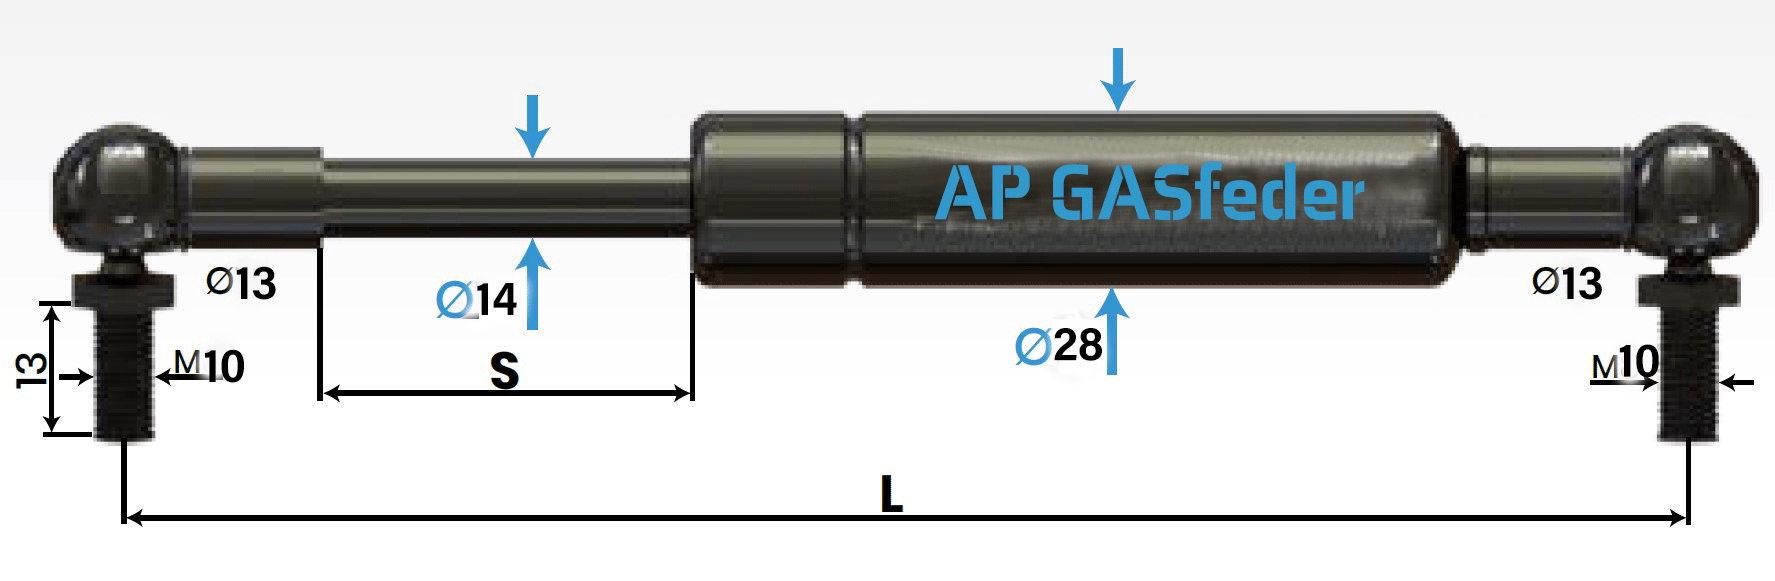 Image de AP GASfeder 1500N, 14/28, Hub(S): 150 mm, Länge (L): 435 mm,  Alternatvie SRST.2362LI